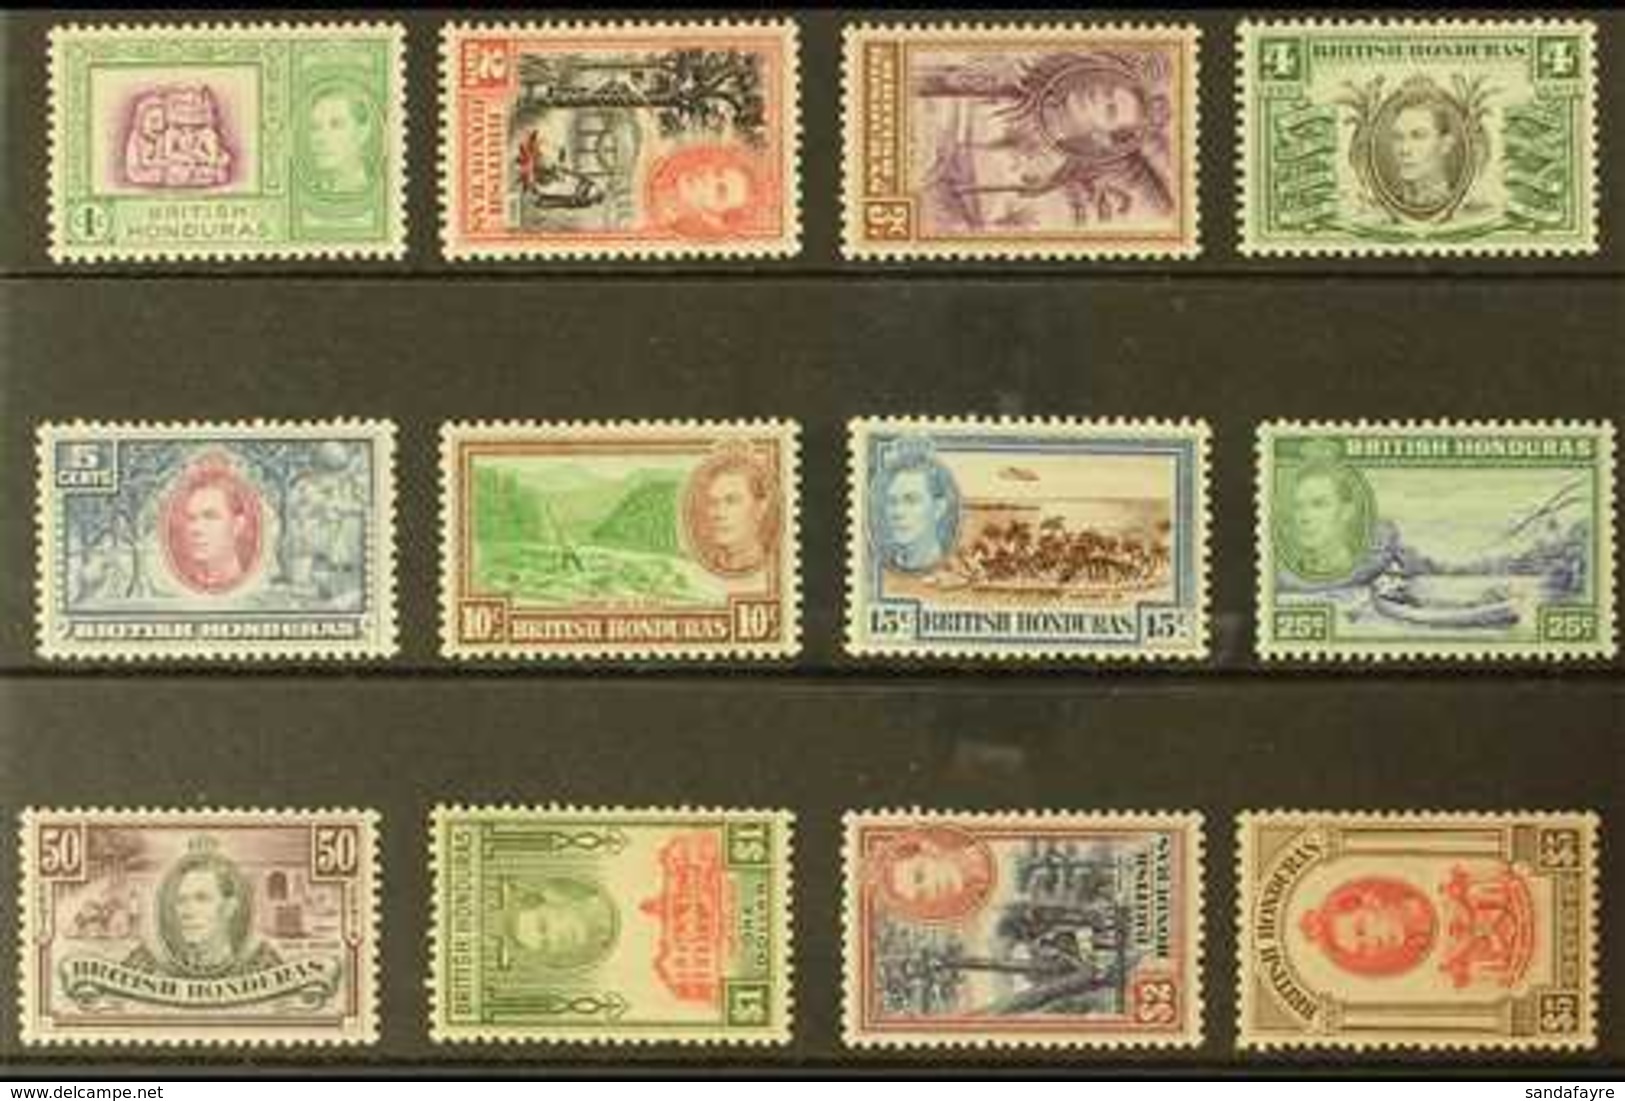 1938-47 Pictorial Definitive Set, SG 150/61, Fine Mint, $5 Is Never Hinged (12 Stamps) For More Images, Please Visit Htt - Honduras Britannique (...-1970)